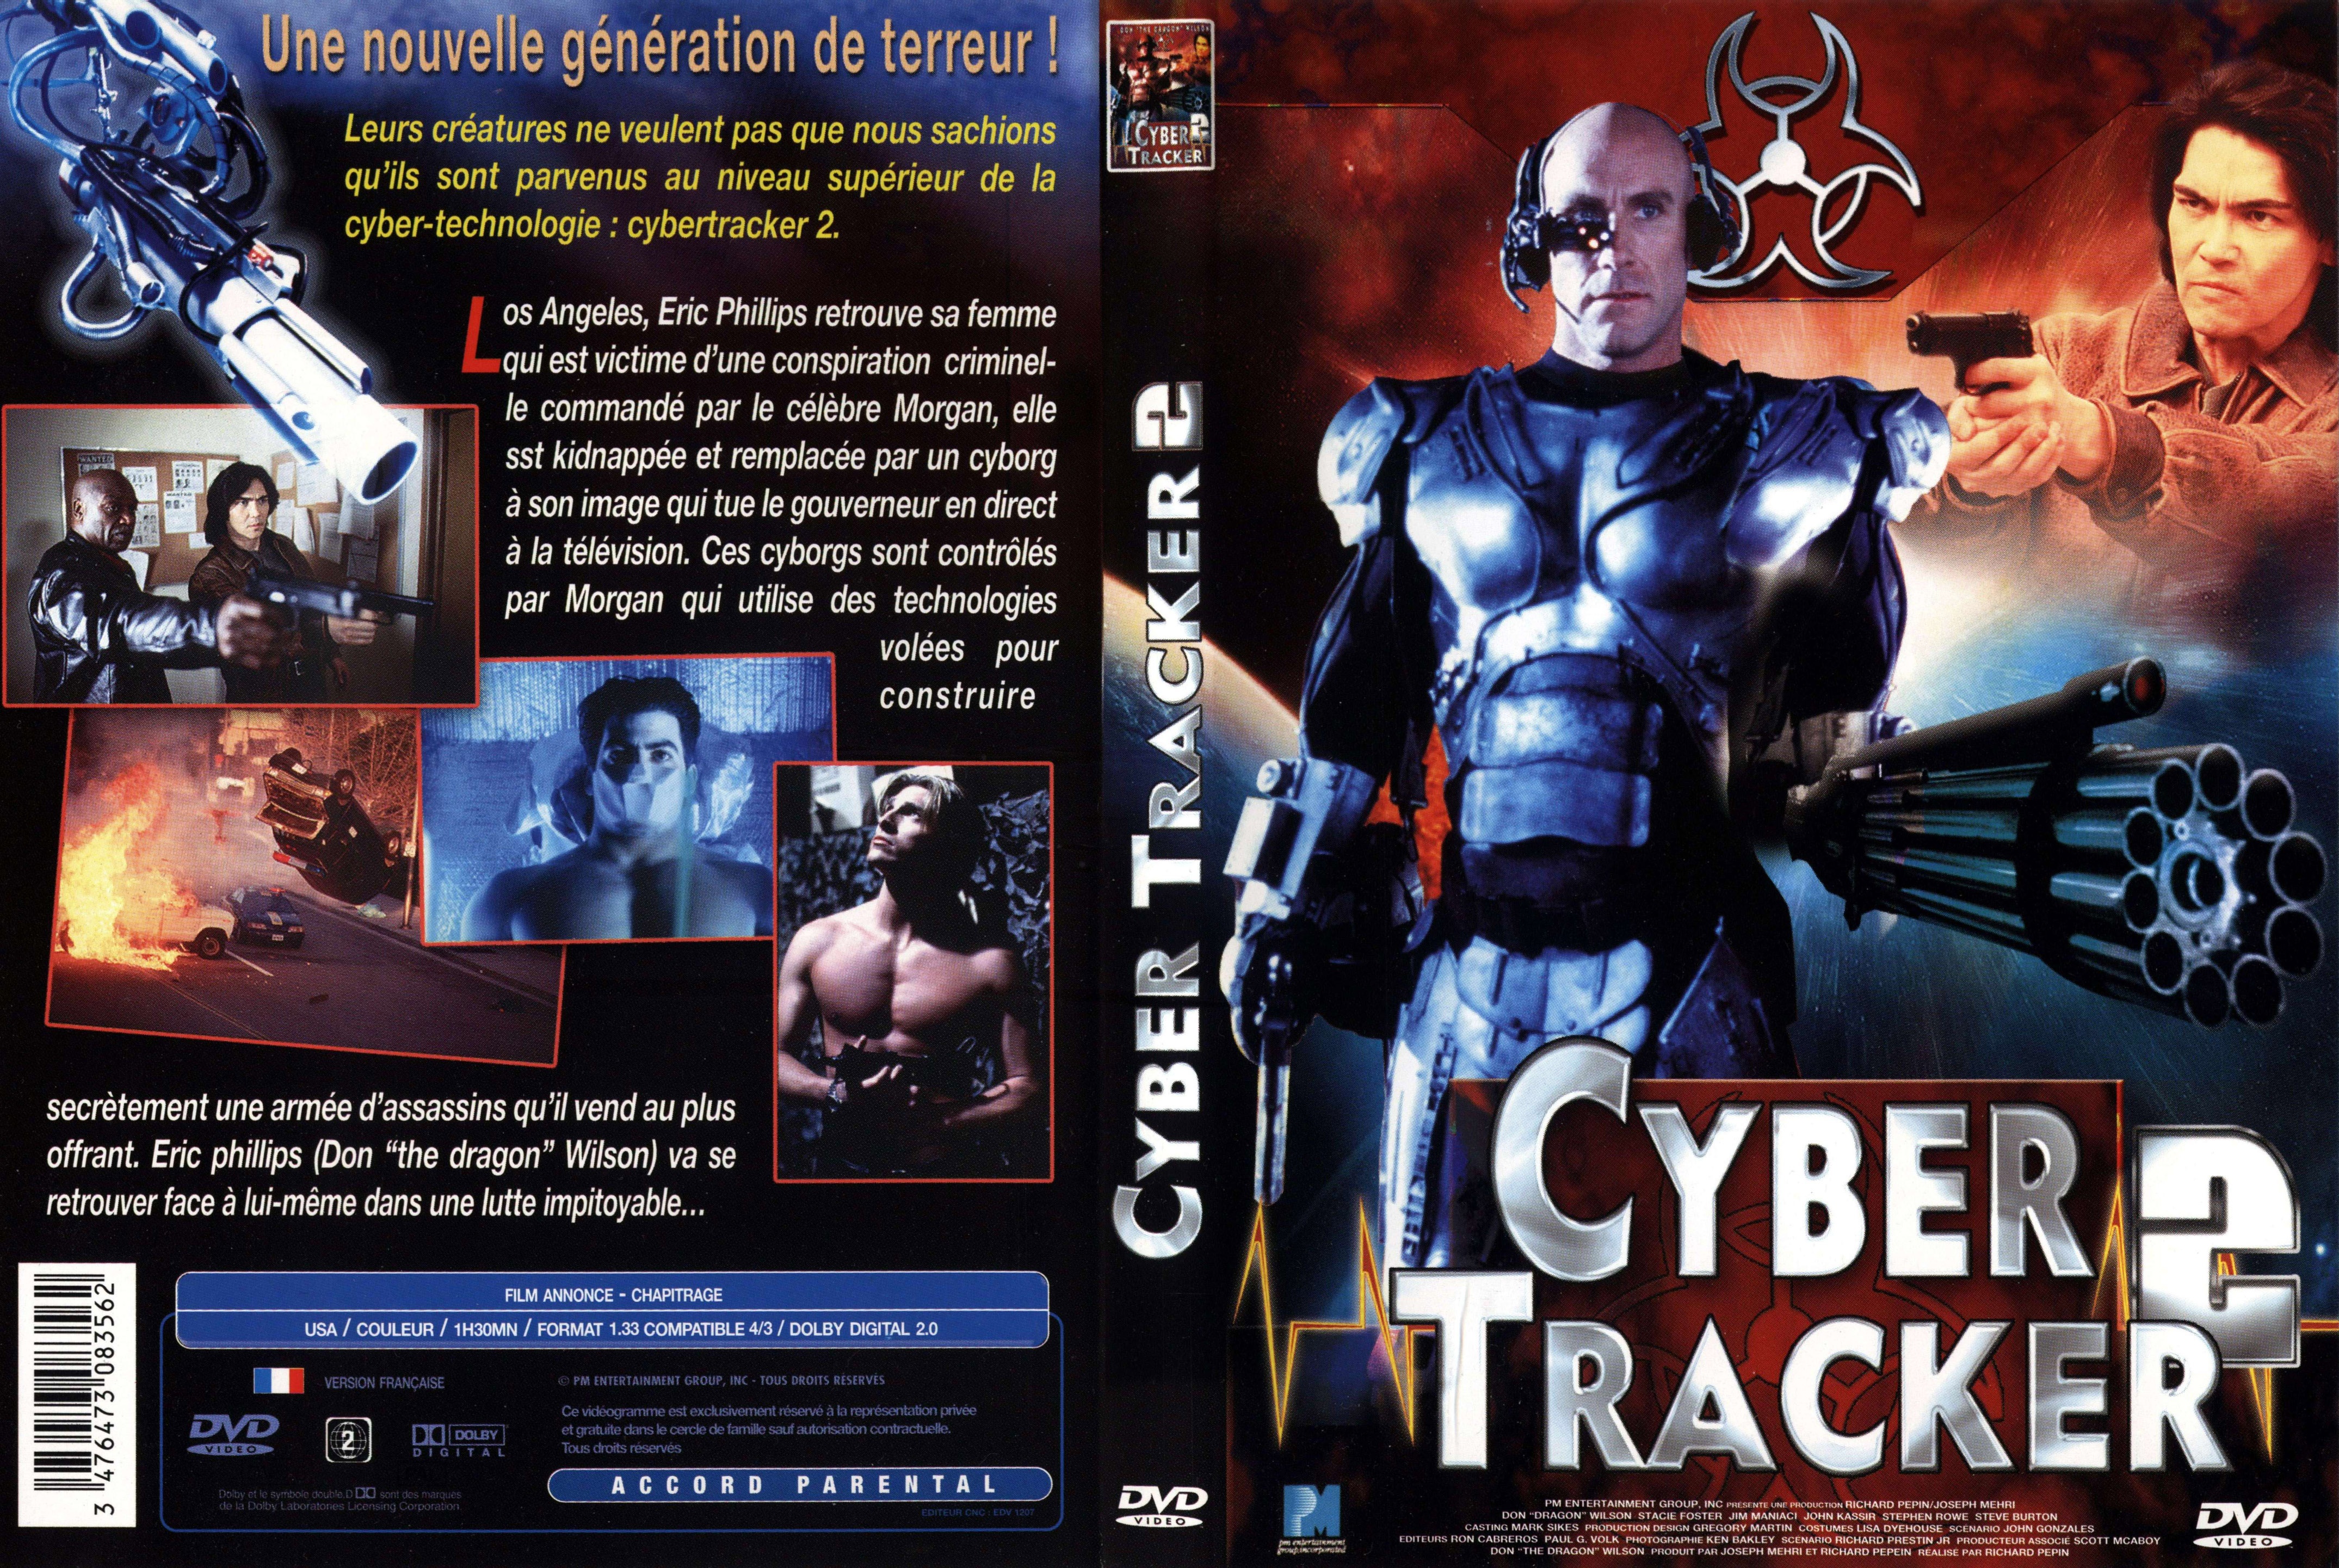 Jaquette DVD Cyber tracker 2